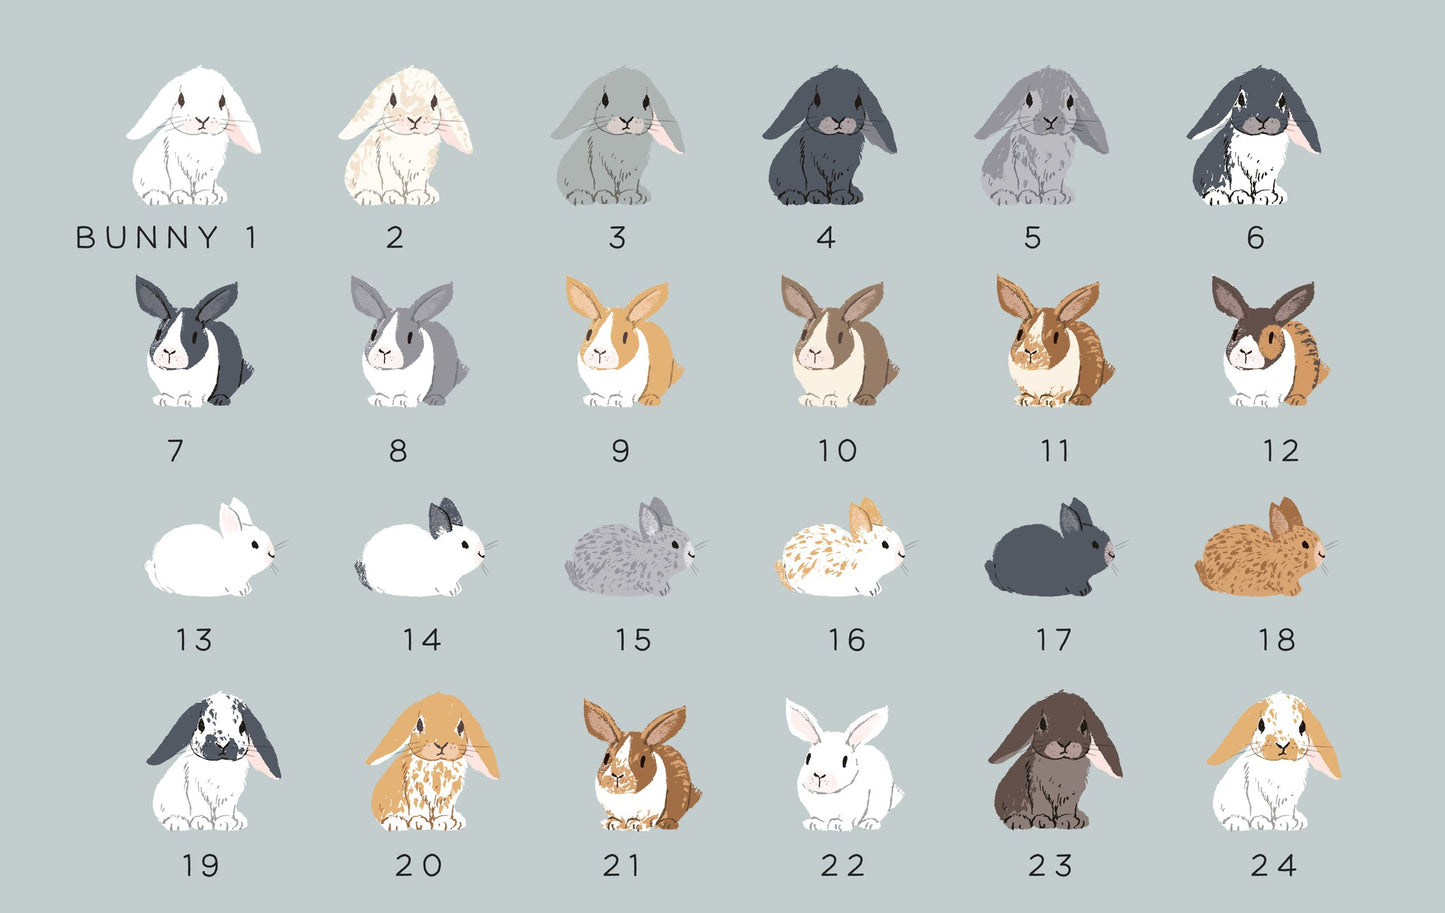 Pet Sympathy Cards Personalised, Cute Rabbit Design